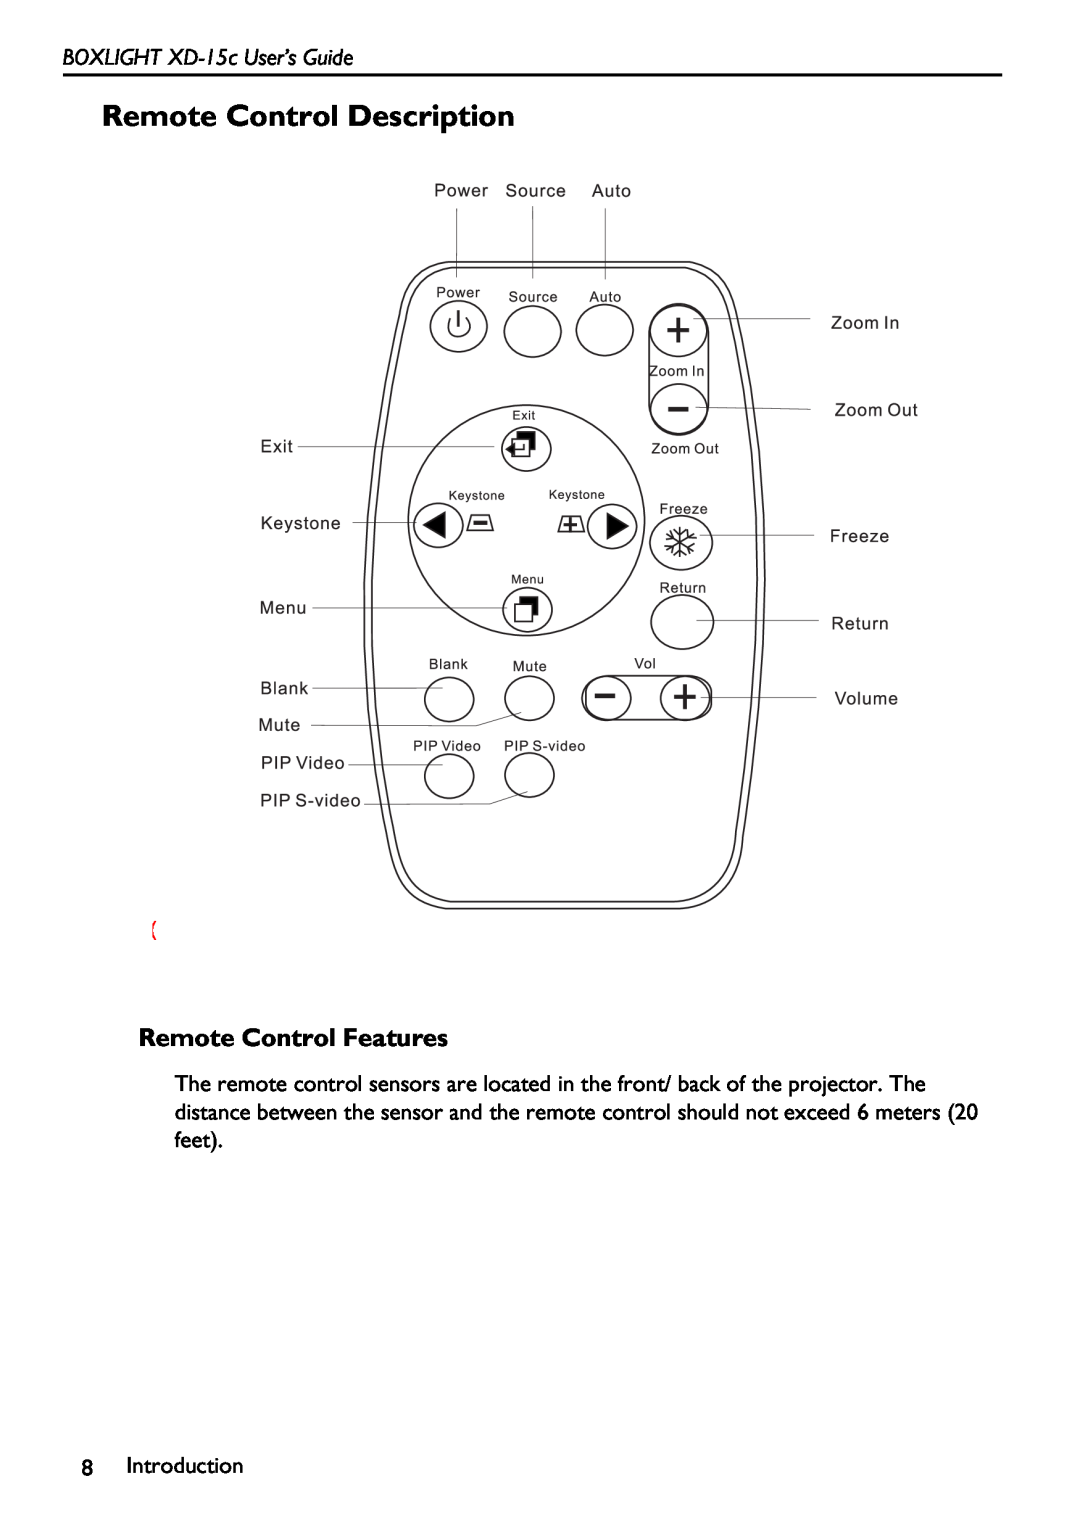 BOXLIGHT manual Remote Control Description, Remote Control Features, BOXLIGHT XD-15c User’s Guide 